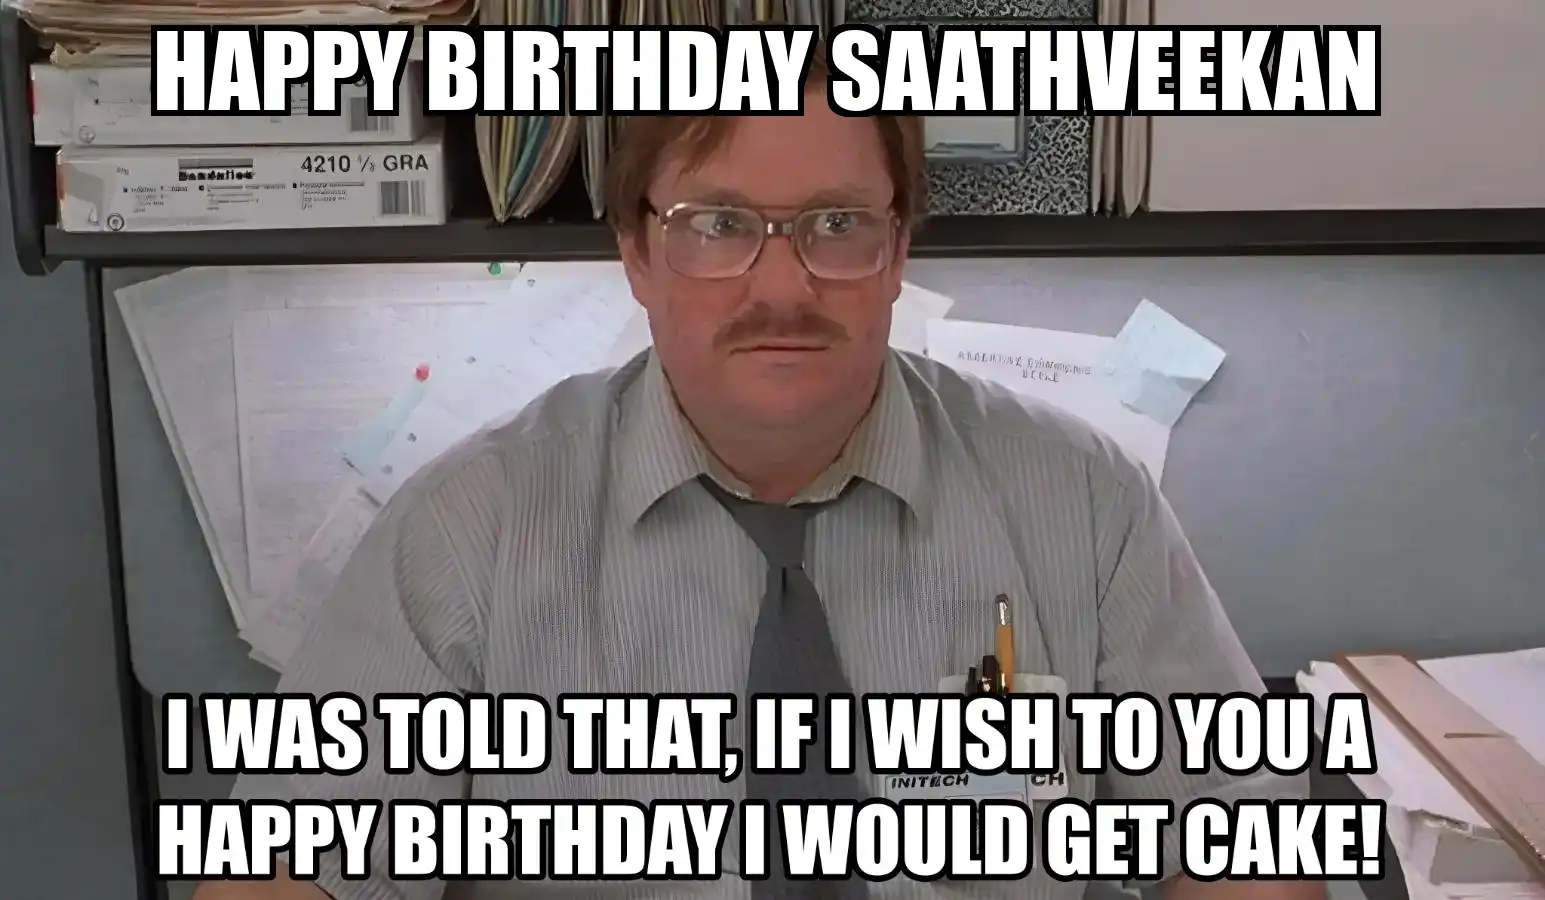 Happy Birthday Saathveekan I Would Get A Cake Meme